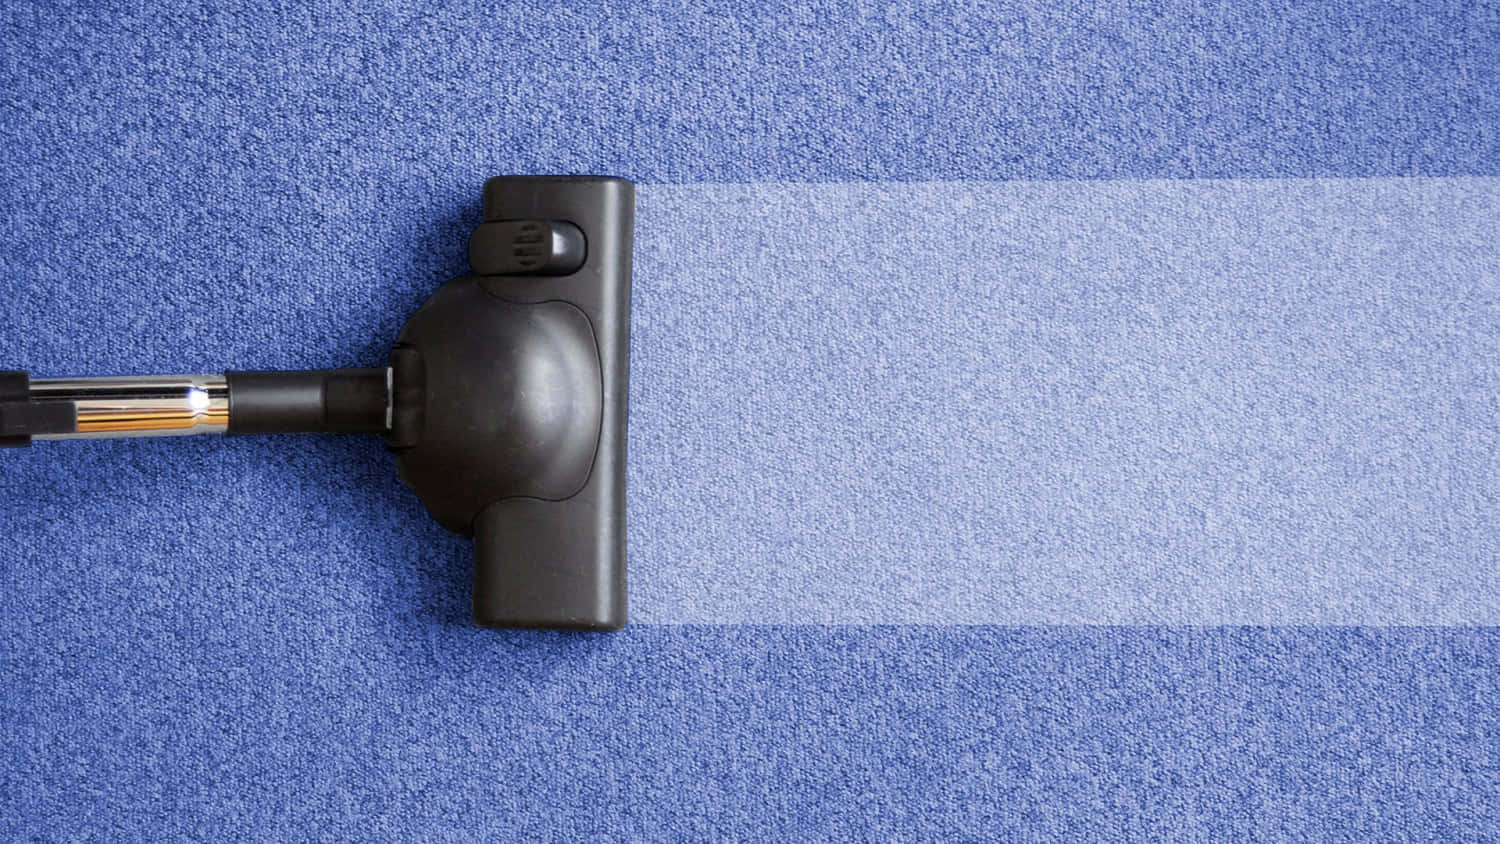 Indigo Carpet Deep Cleaning with Vacuum Machine Wallpaper